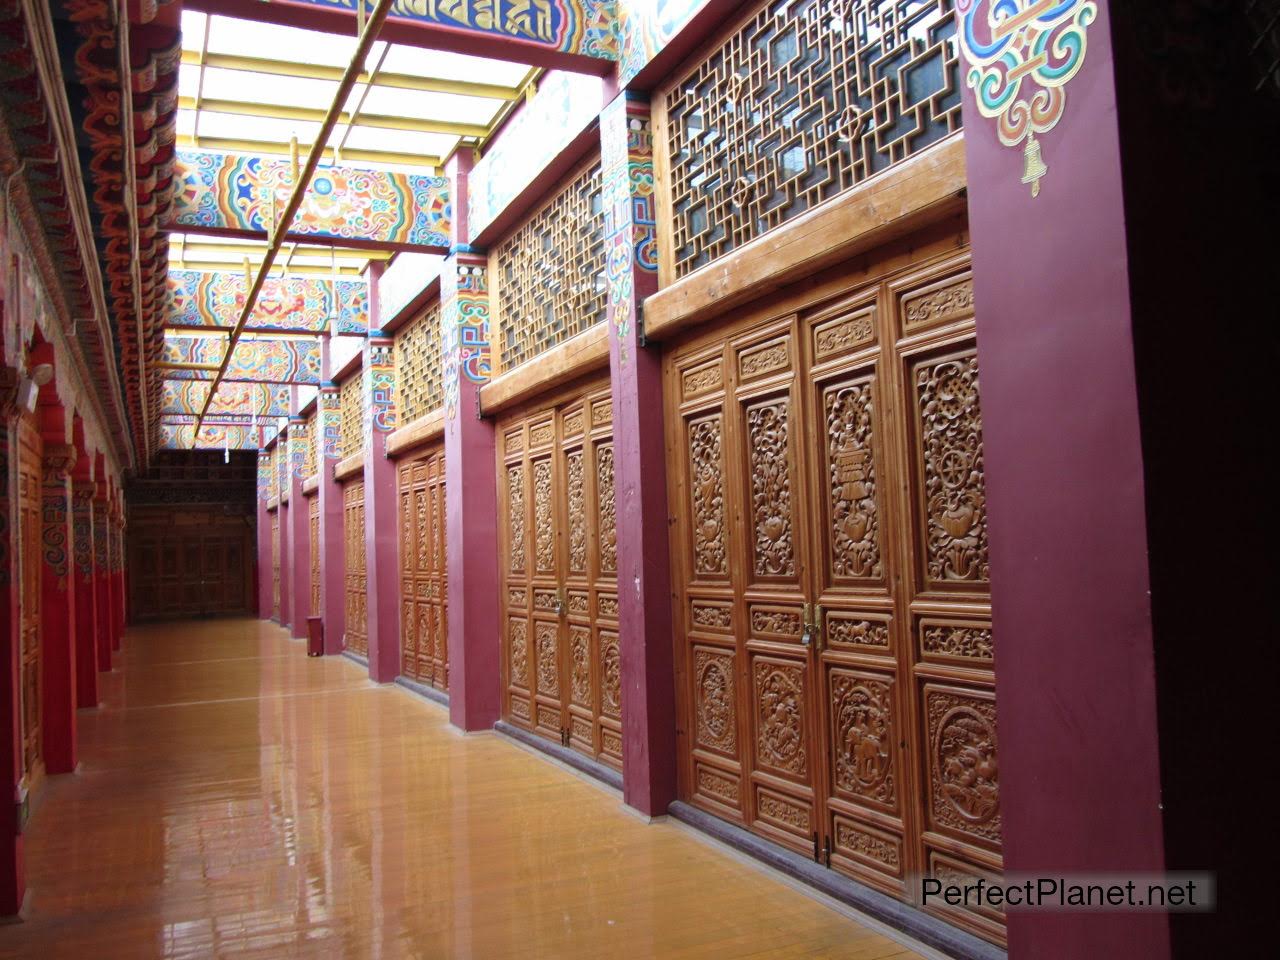 Interior of the Monastery